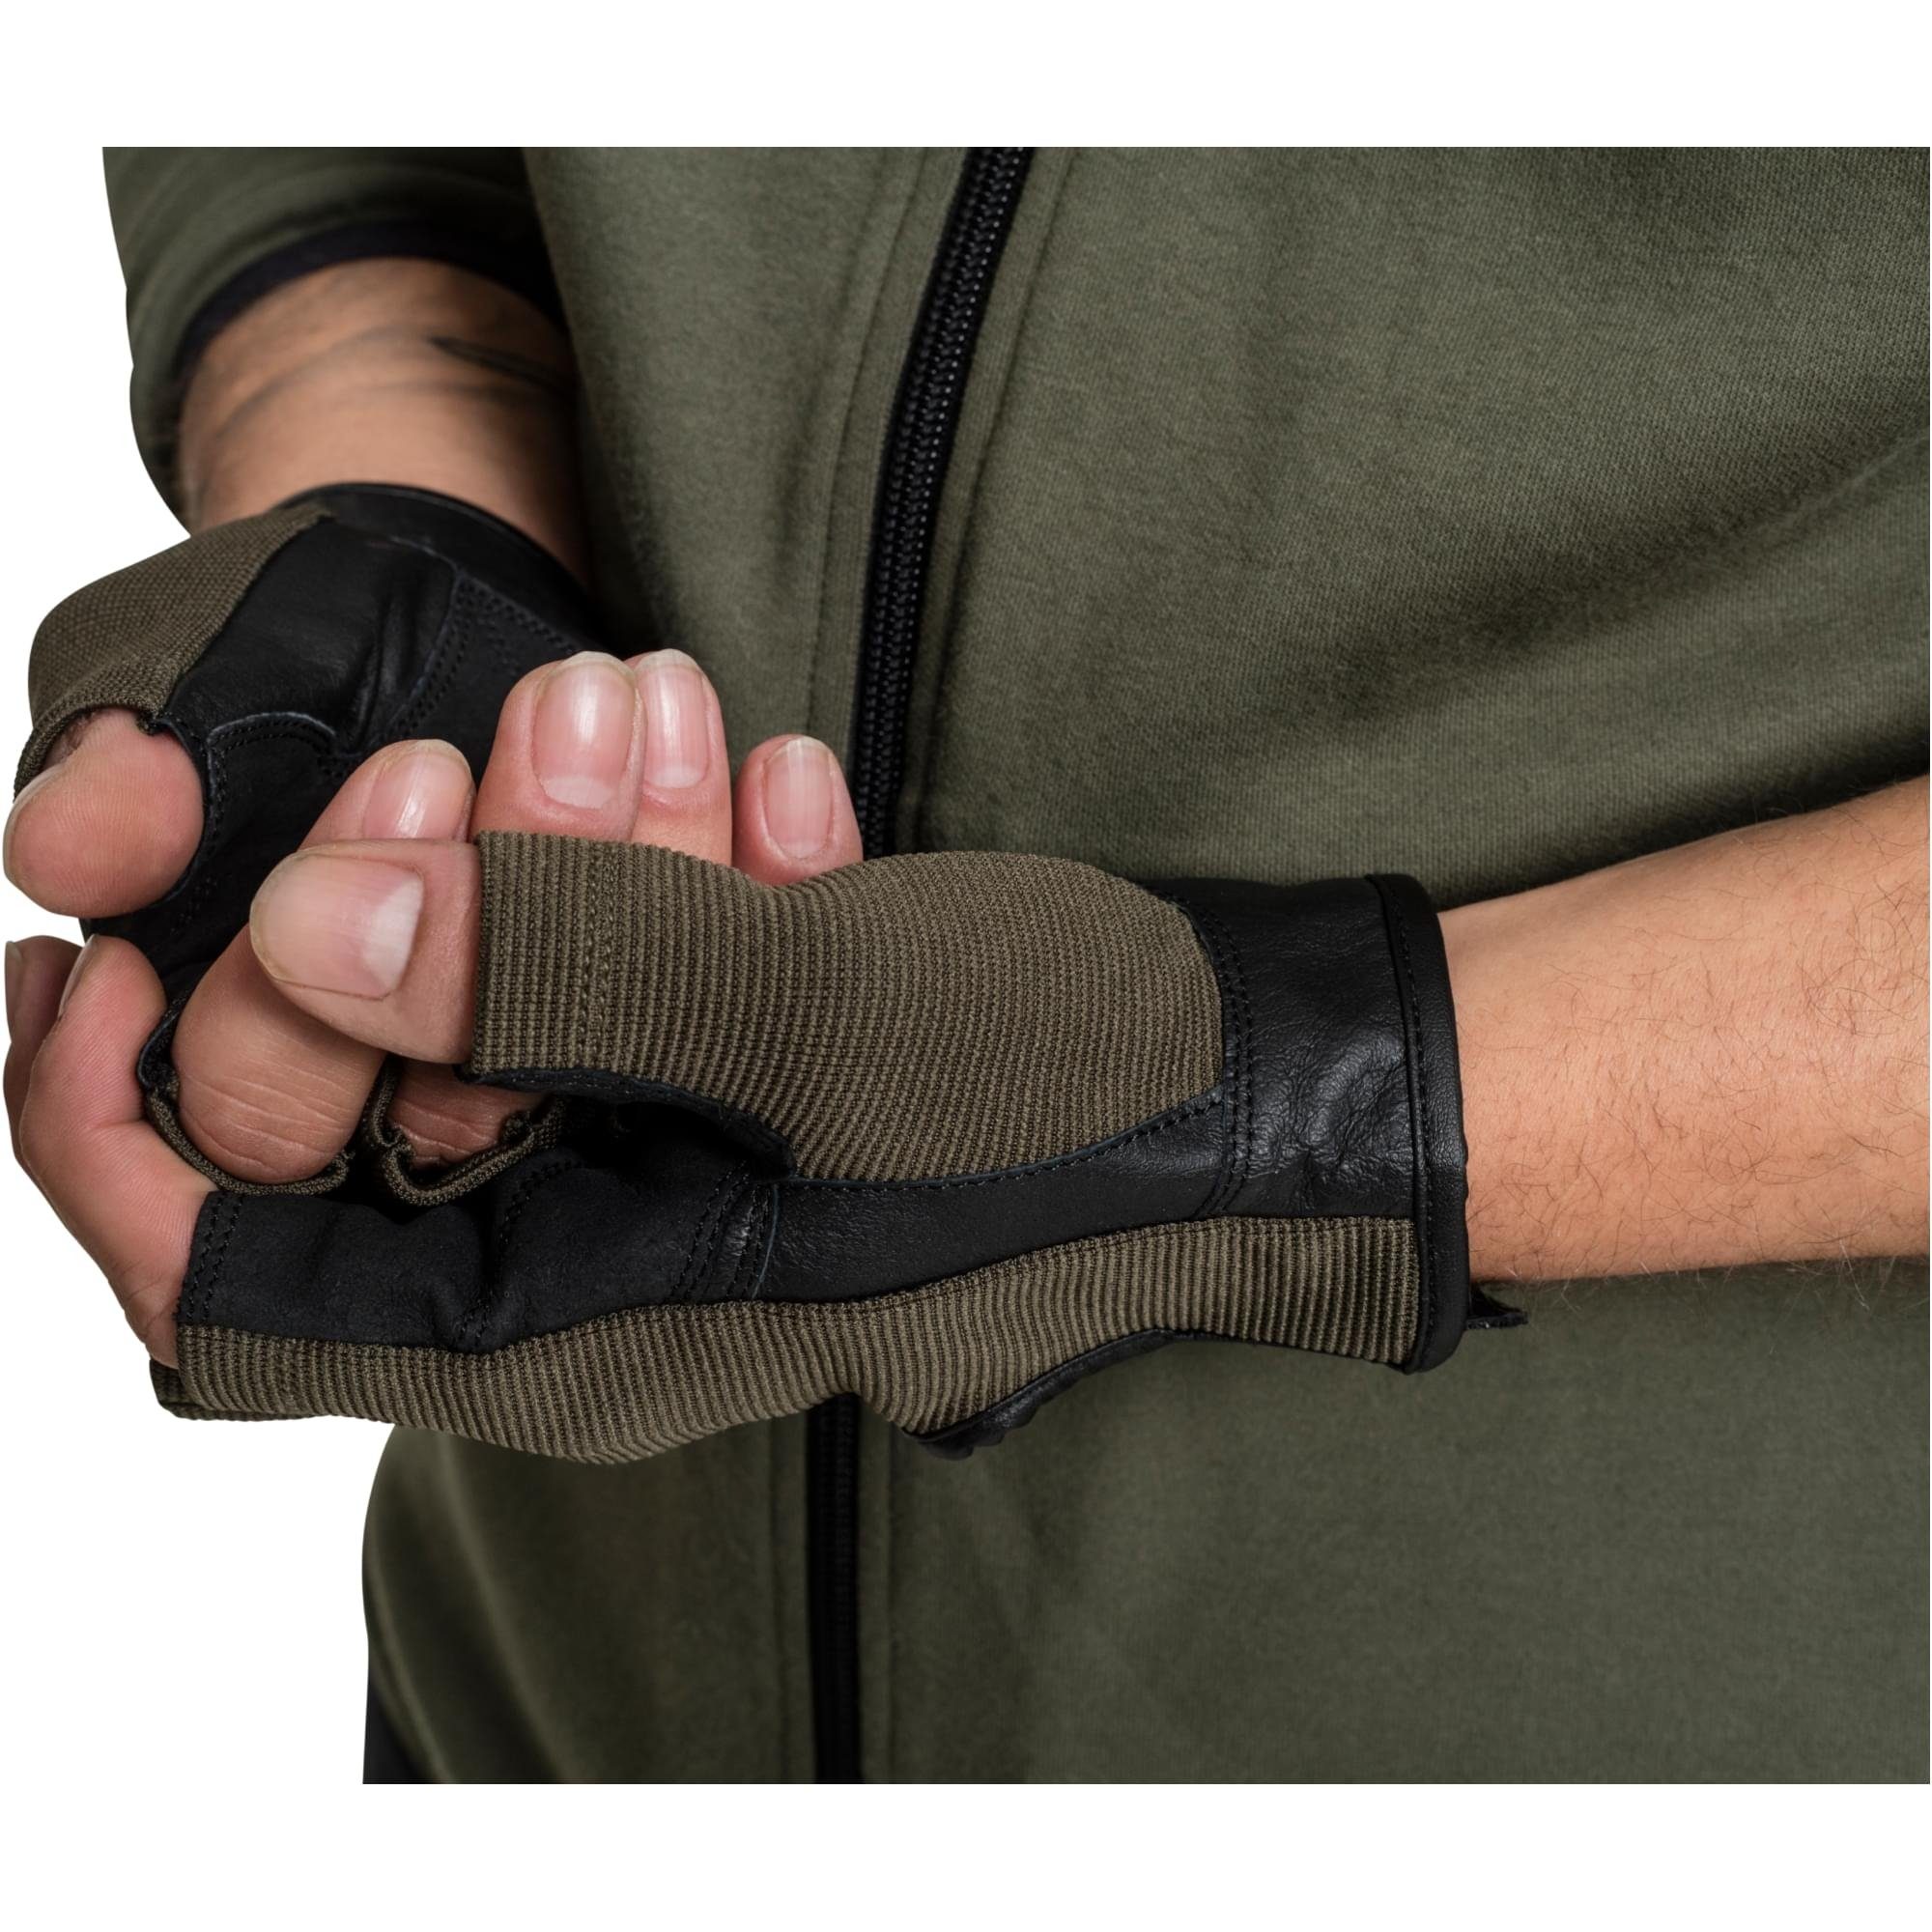 SPORTS Leder, GORILLA Fitness Trainingshandschuhe Handschuhe - Khaki Sporthandschuhe Farbwahl XS/S/M/L/XL, -